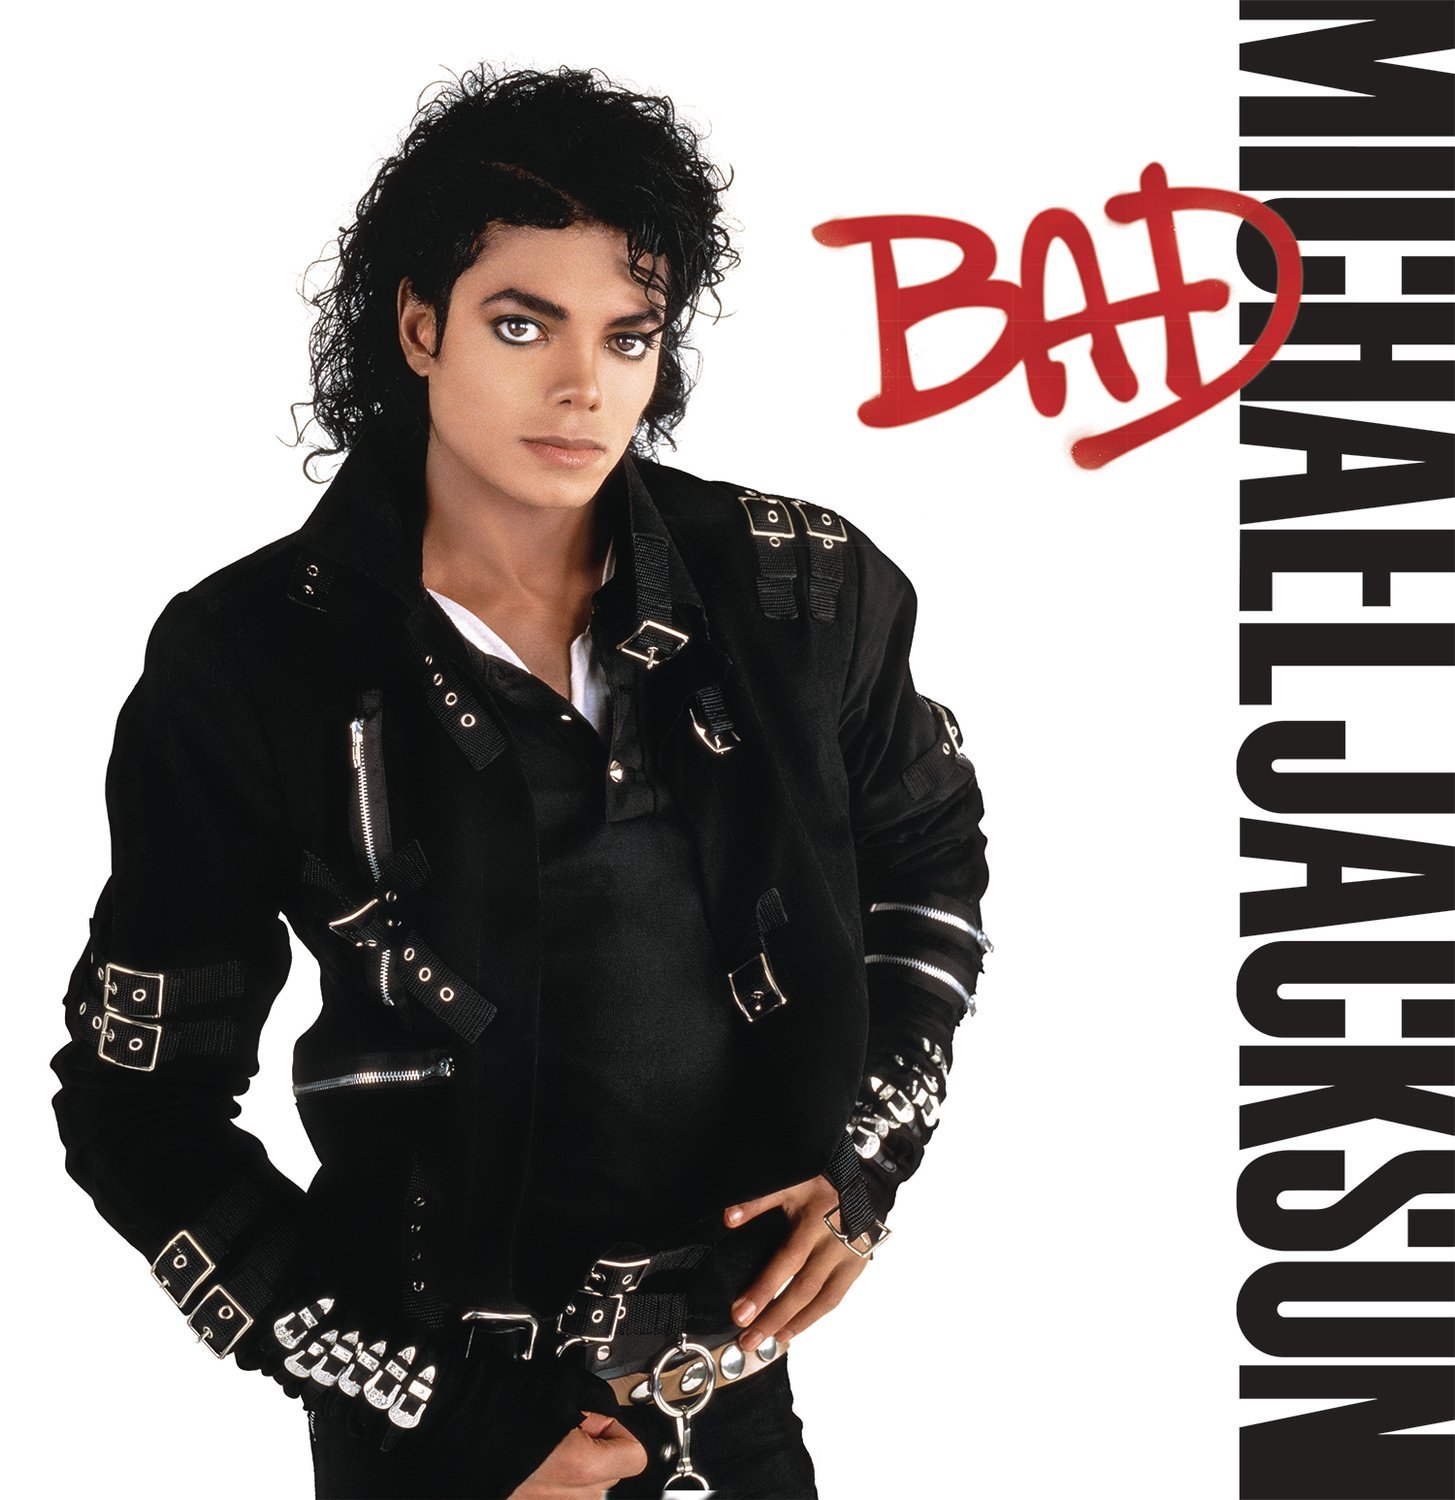 audio review : Bad ( album ) ... Michael Jackson